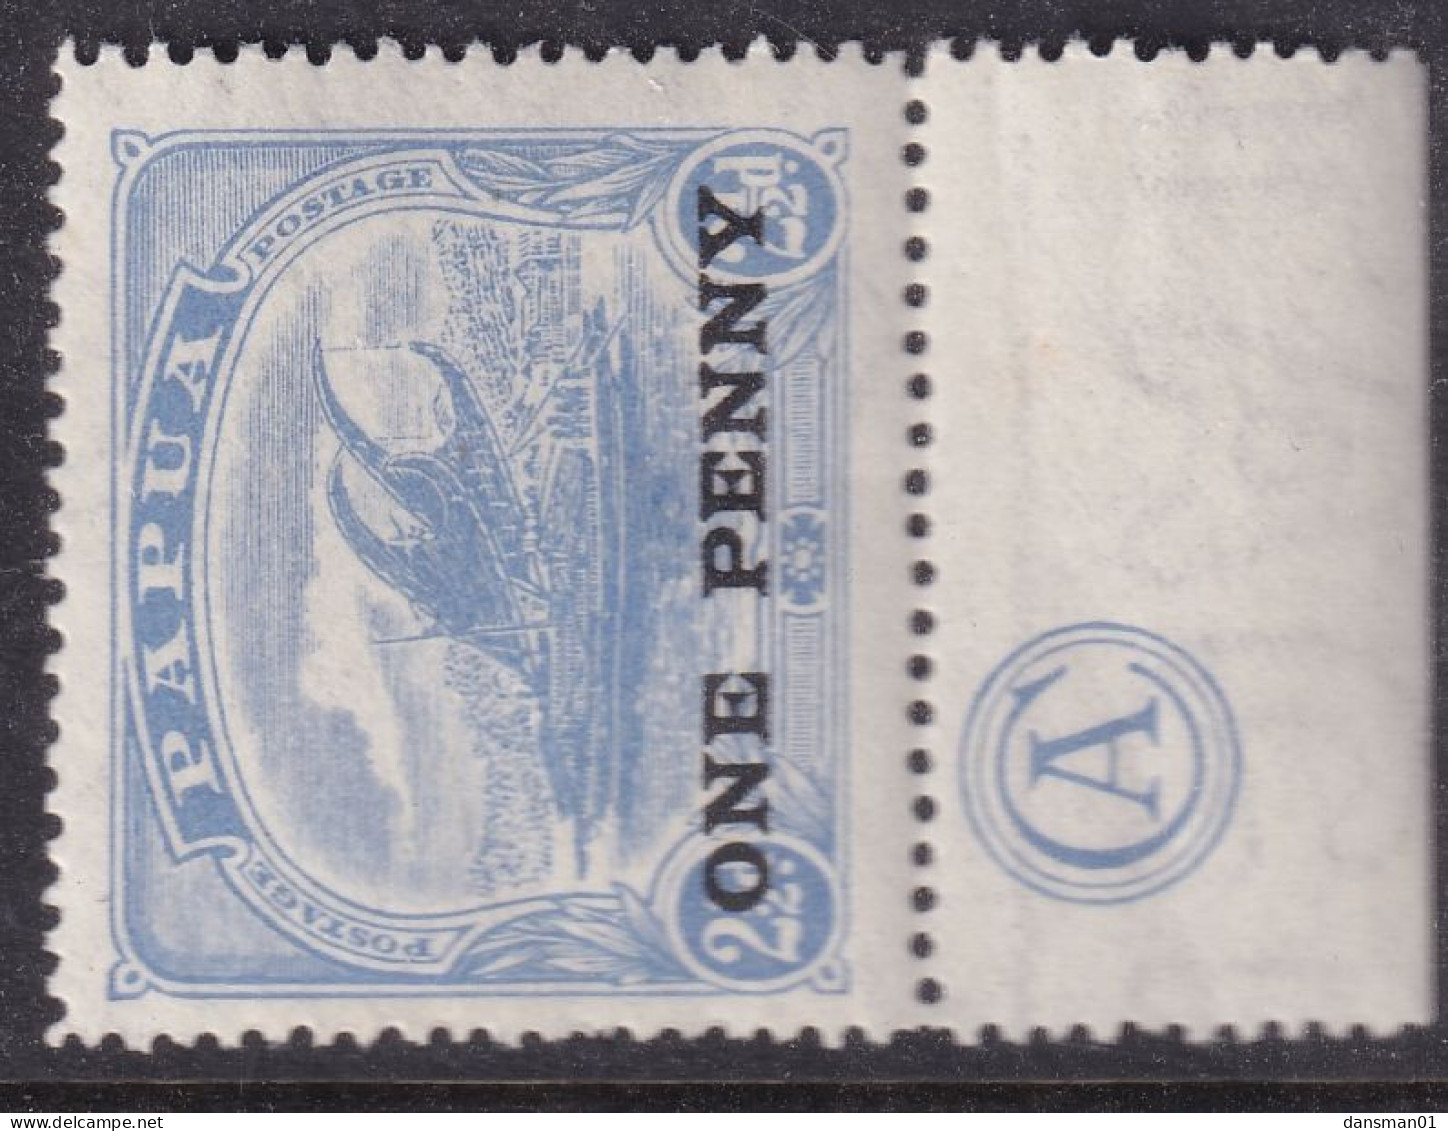 PAPUA 1917 ONE PENNY OVPT Sc 76 Mint Never Hinged - Papúa Nueva Guinea